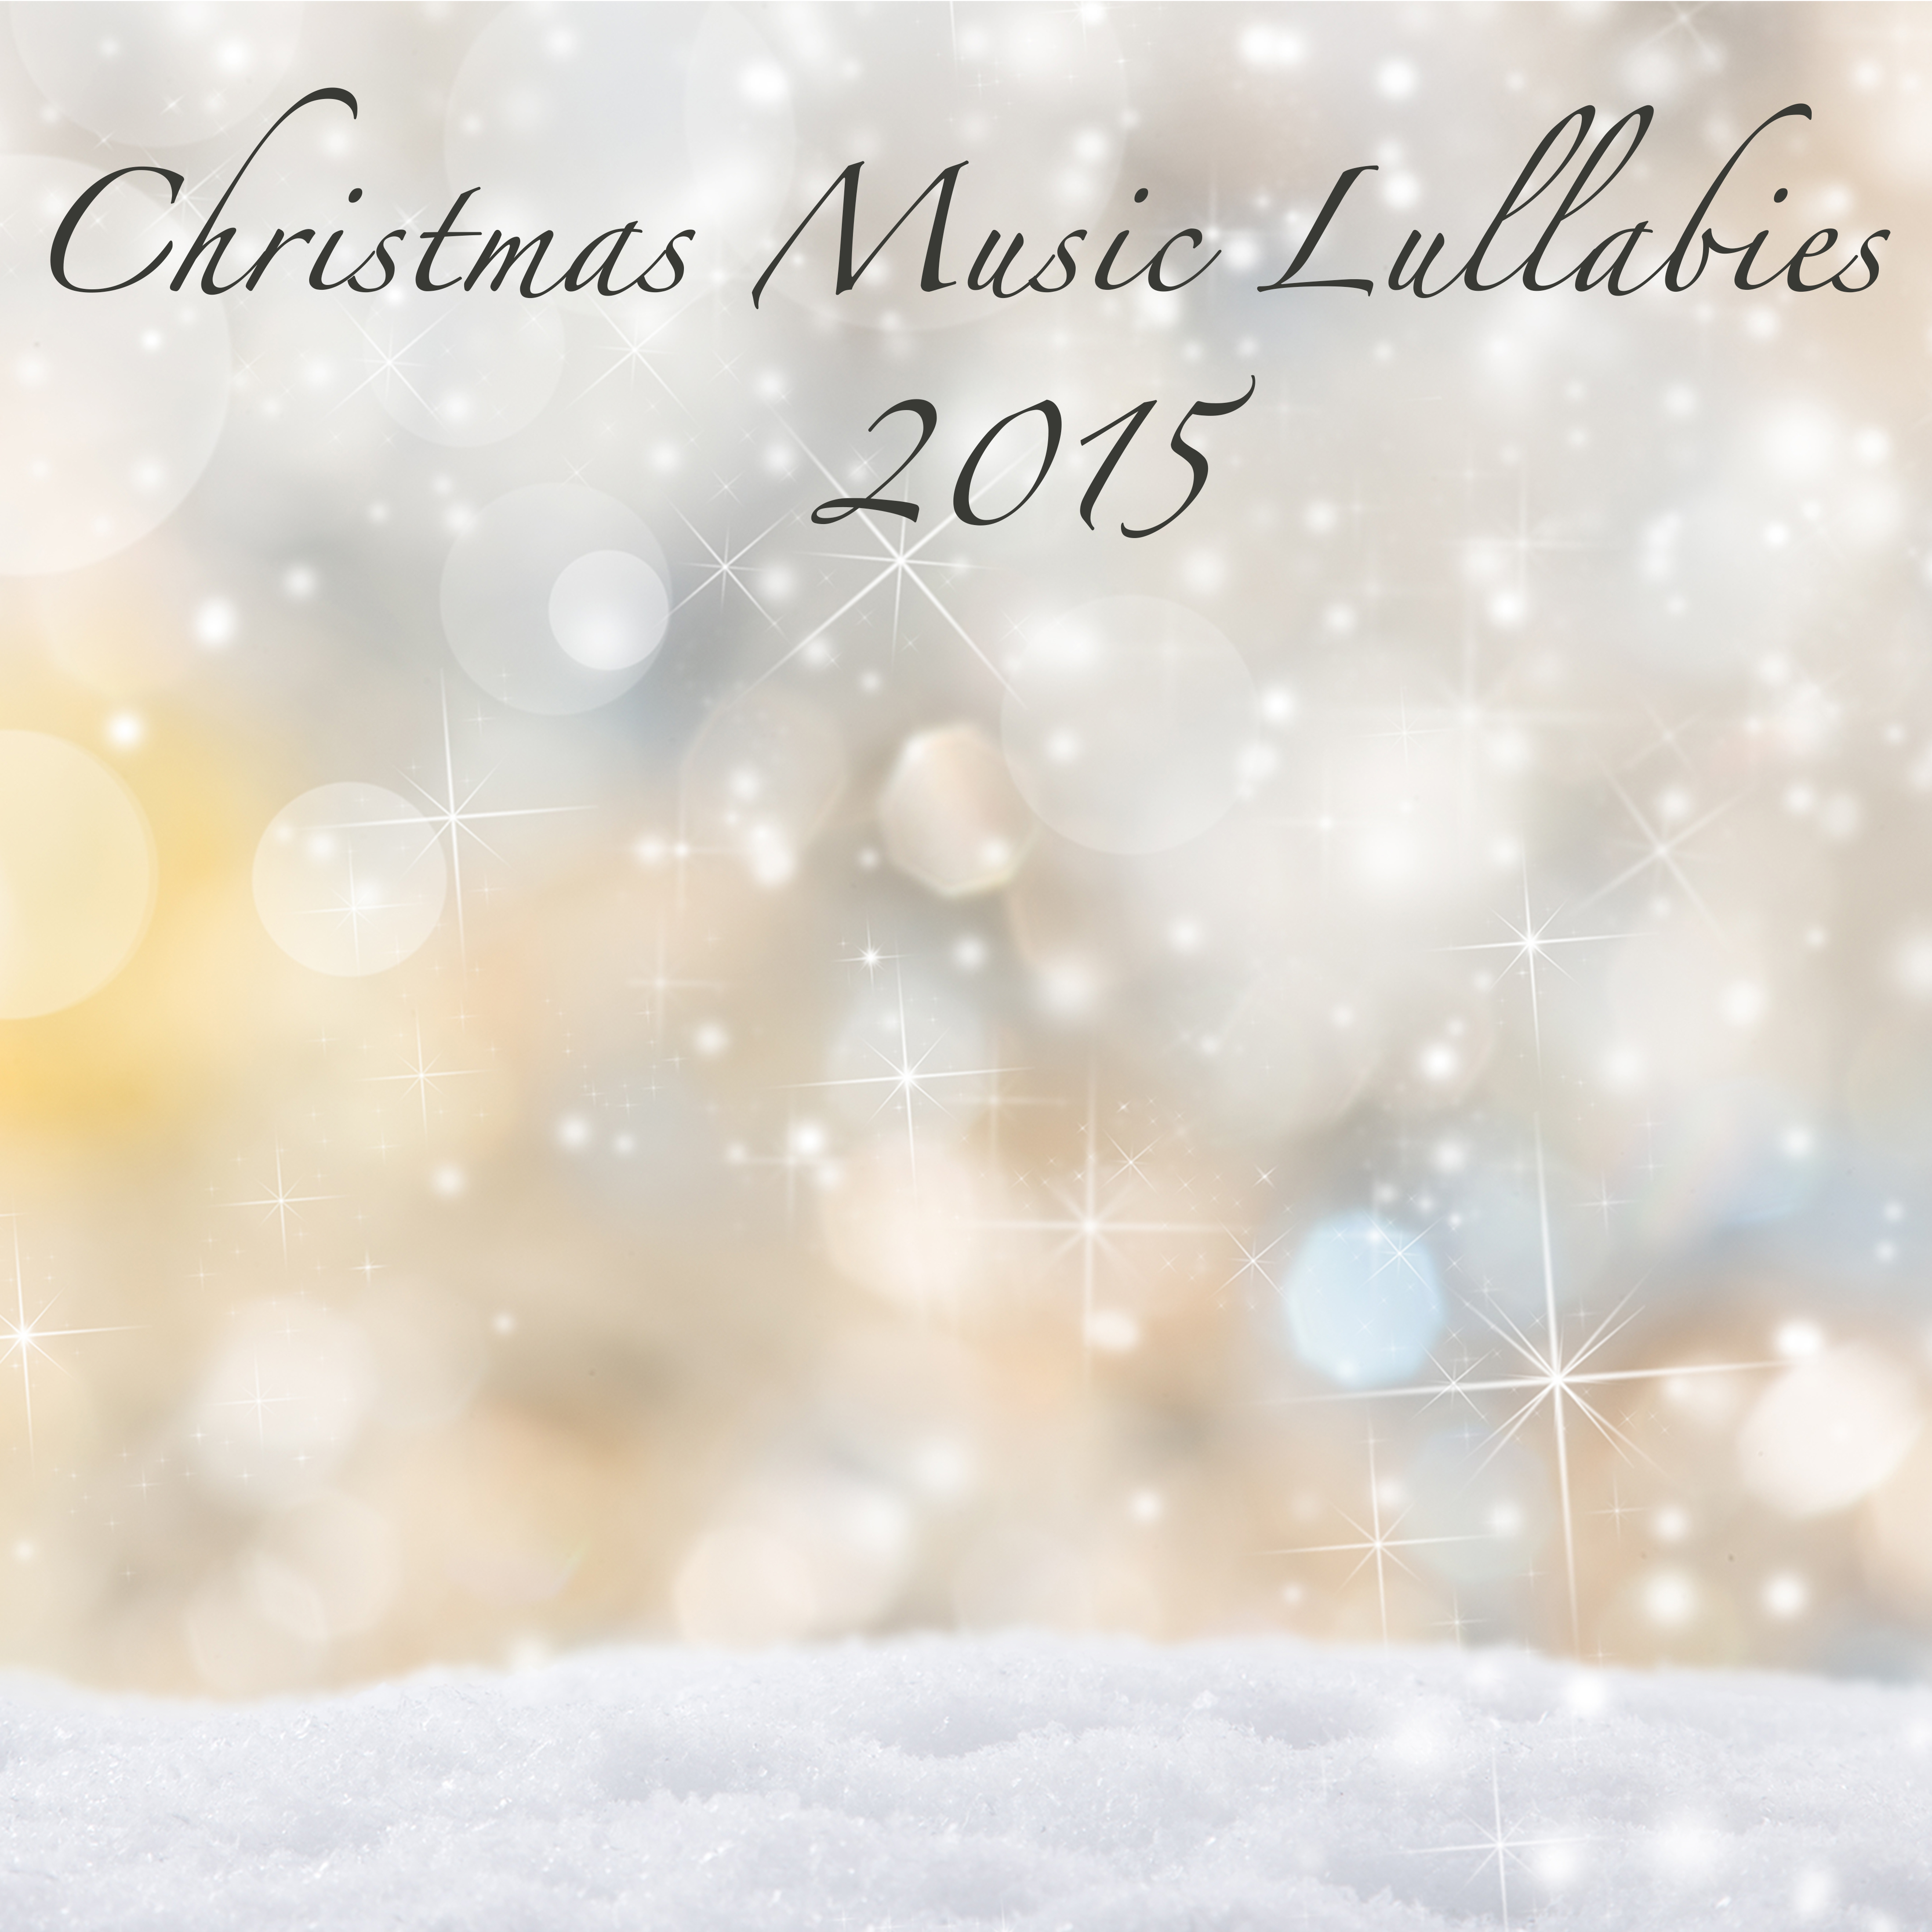 Christmas Music Lullabies 2015  Soft New Age  Classical Christmas Songs for Your Baby Sleep, Classics  Xmas Songs for Falling Asleep